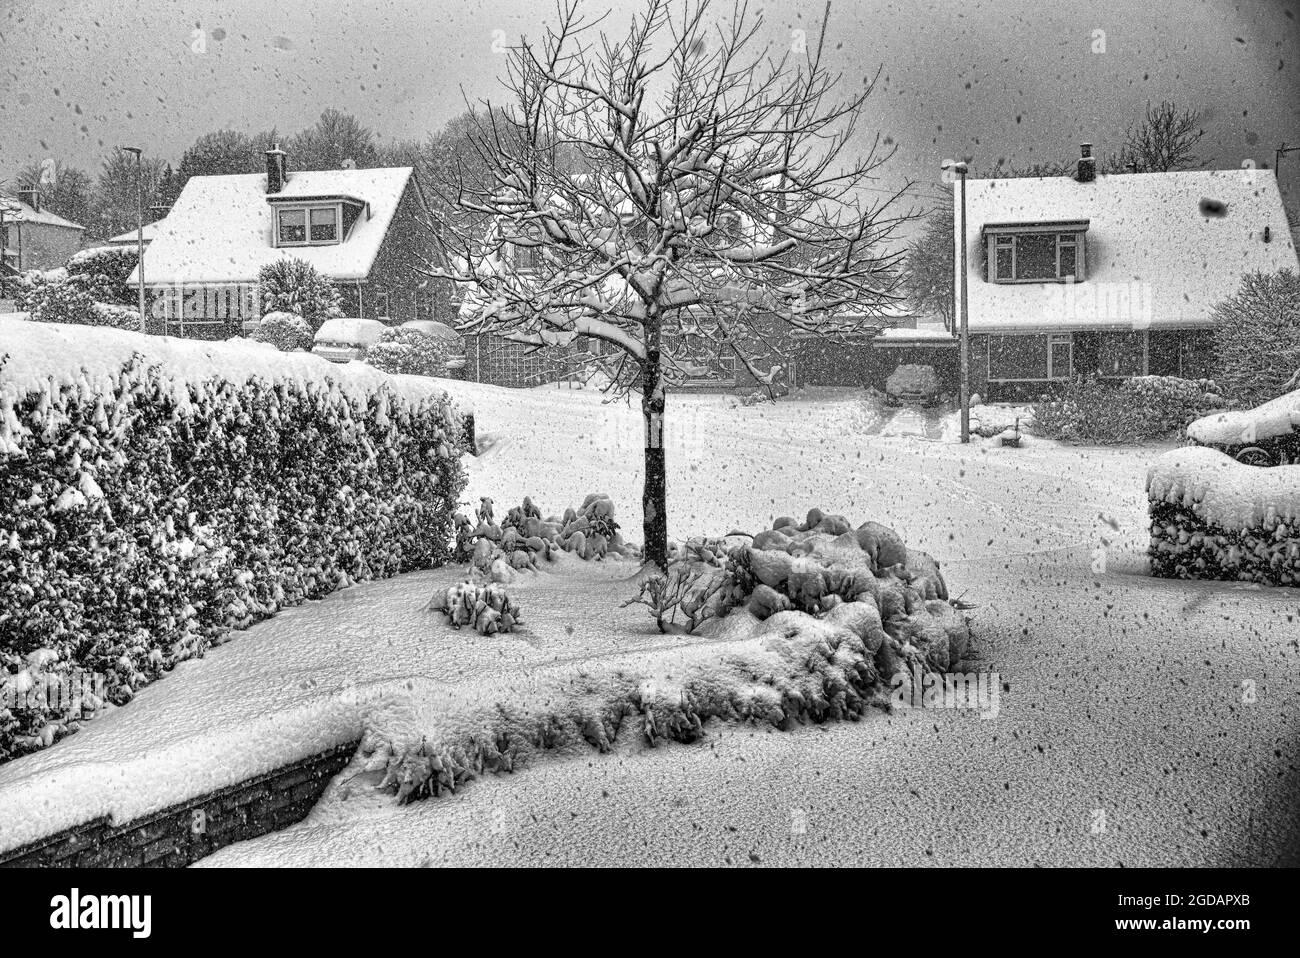 Digitally enhanced, manipulated, Snowy scene in housing estate, heavy snowfall, cars snowed in, covered in snow, winter scene,  Scotland, UK. Stock Photo